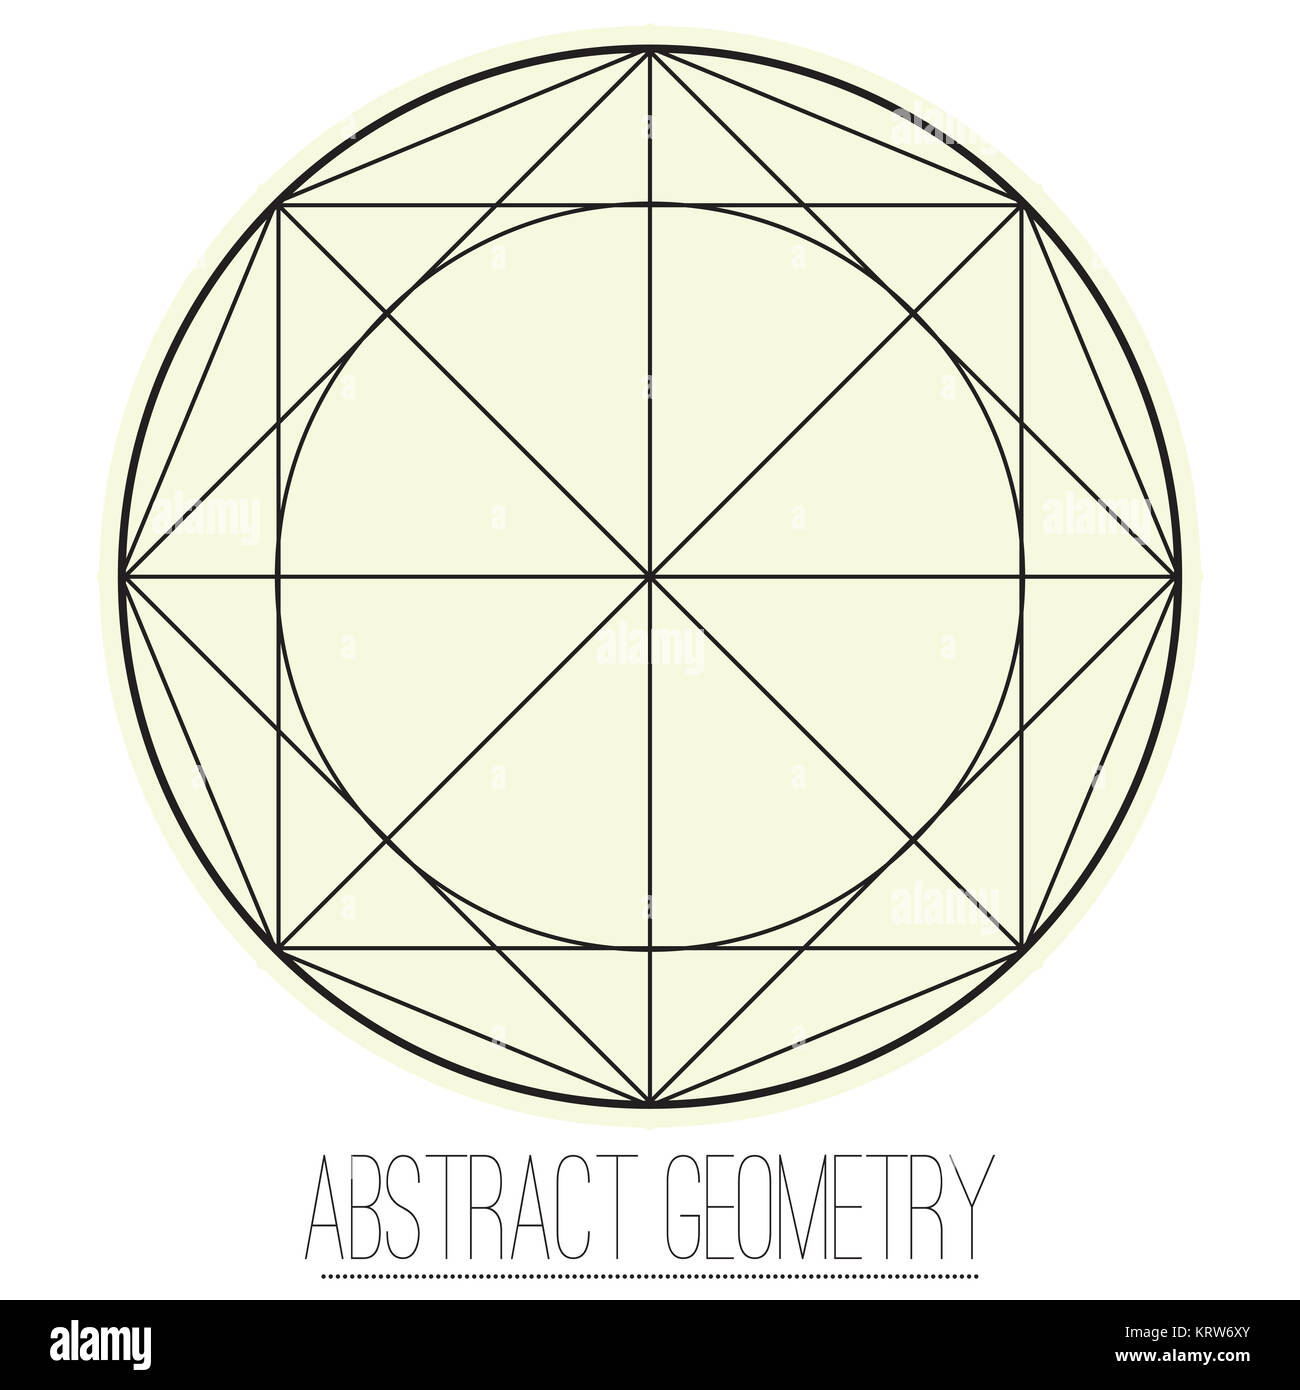 Abstrakte geometrische Figur mit Raute, Kreis, Quadrat Stockfotografie -  Alamy